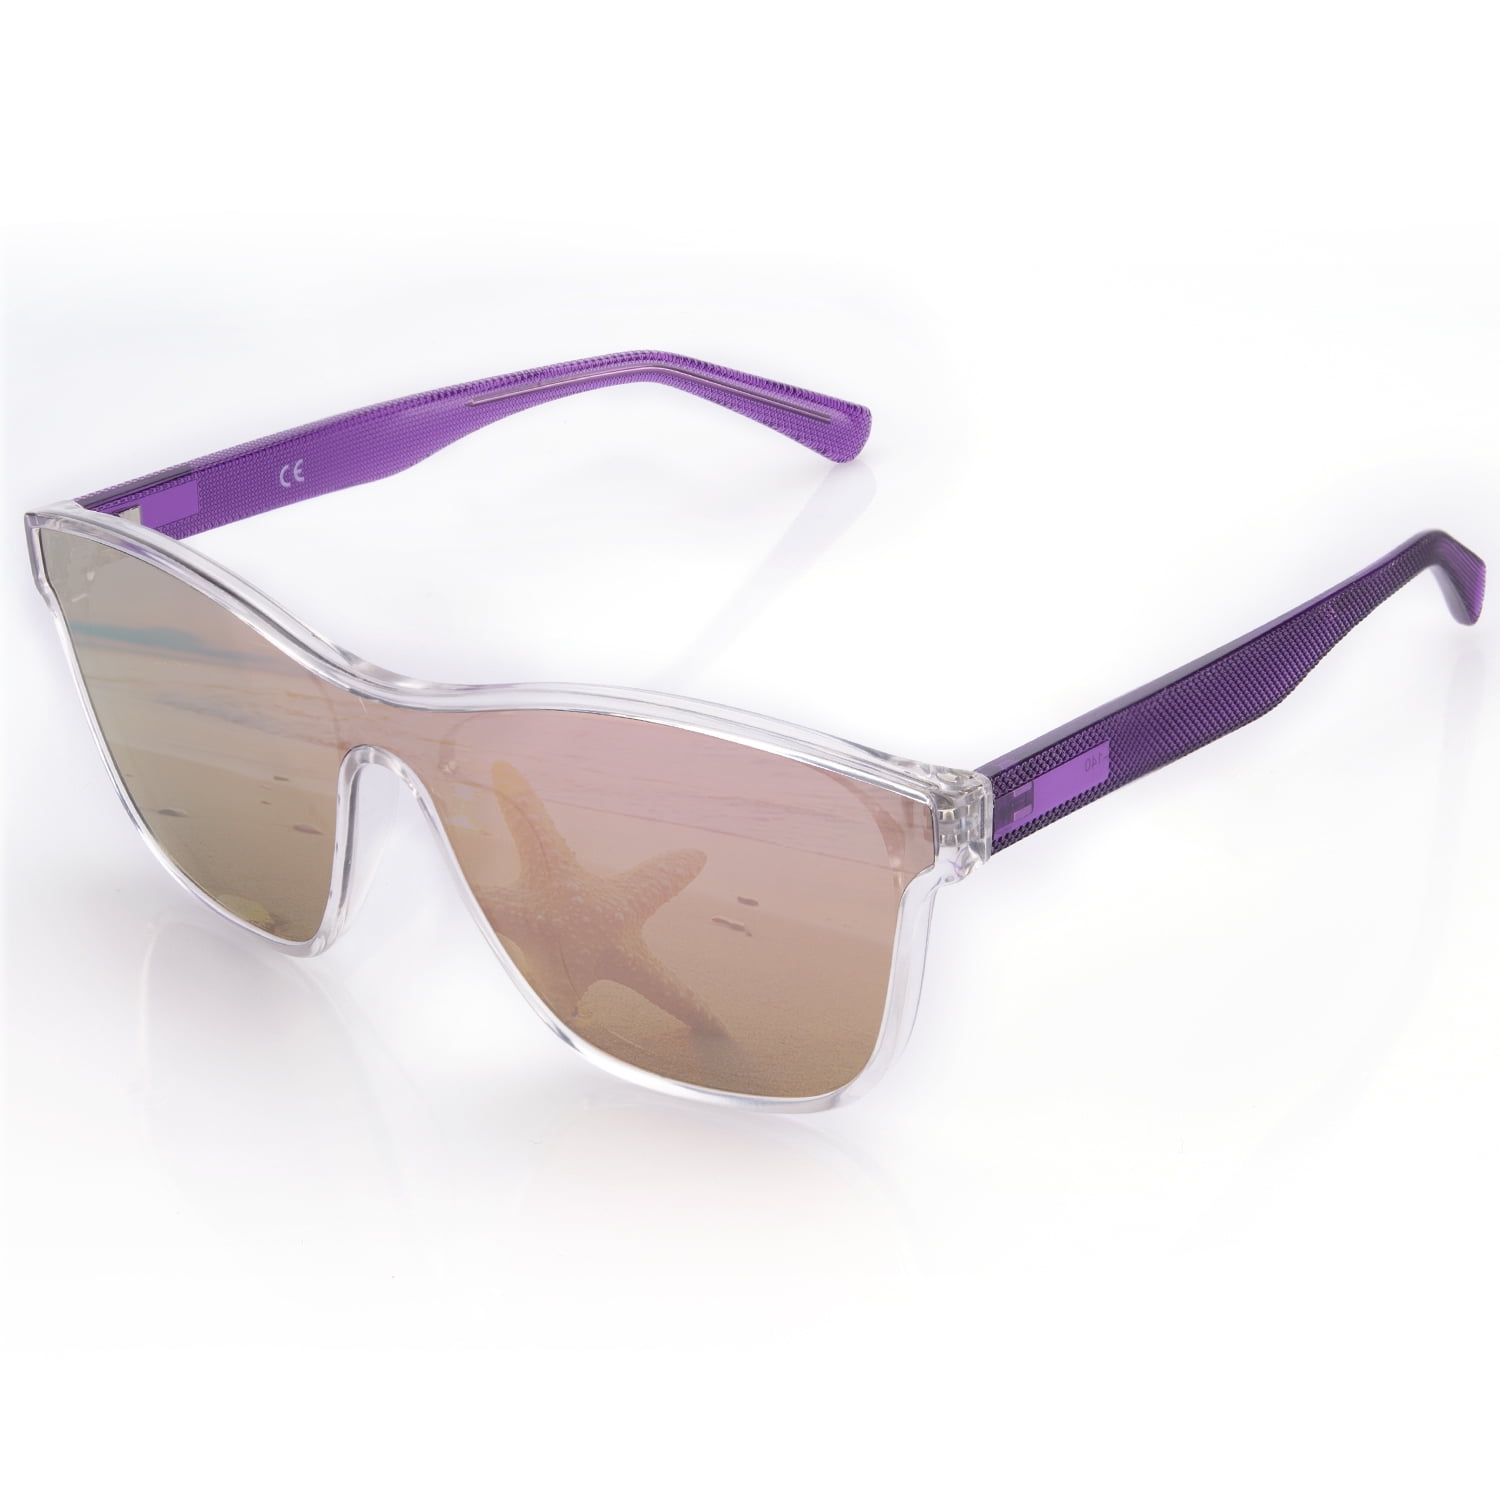 Polarized Sports Sunglasses Glasses TR90 Unbreakable Frame Ski racing Style 